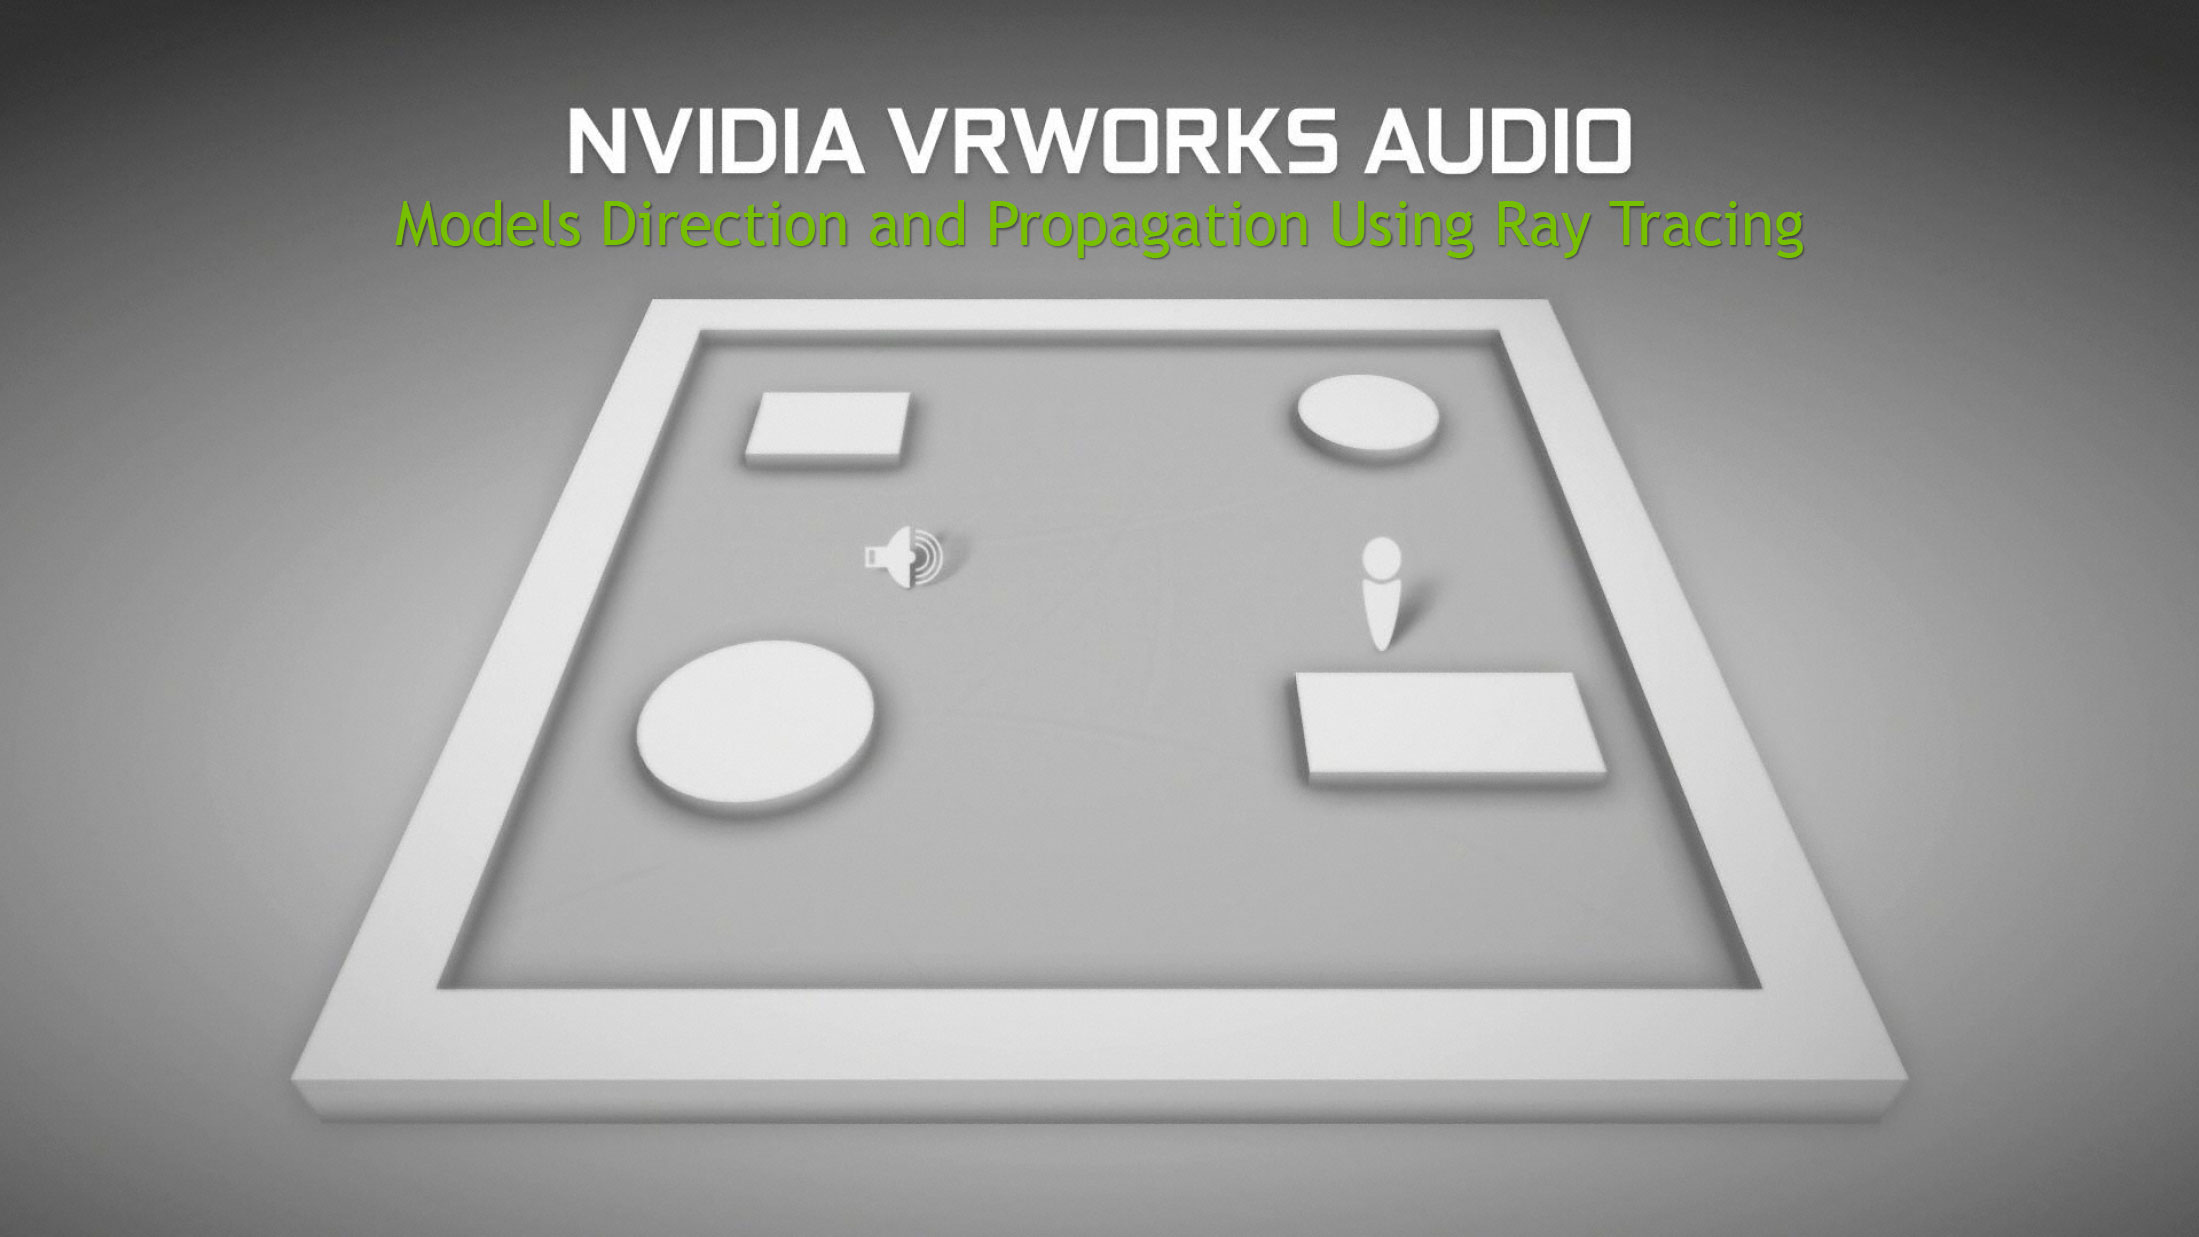 VRWORKS Audio 2.0